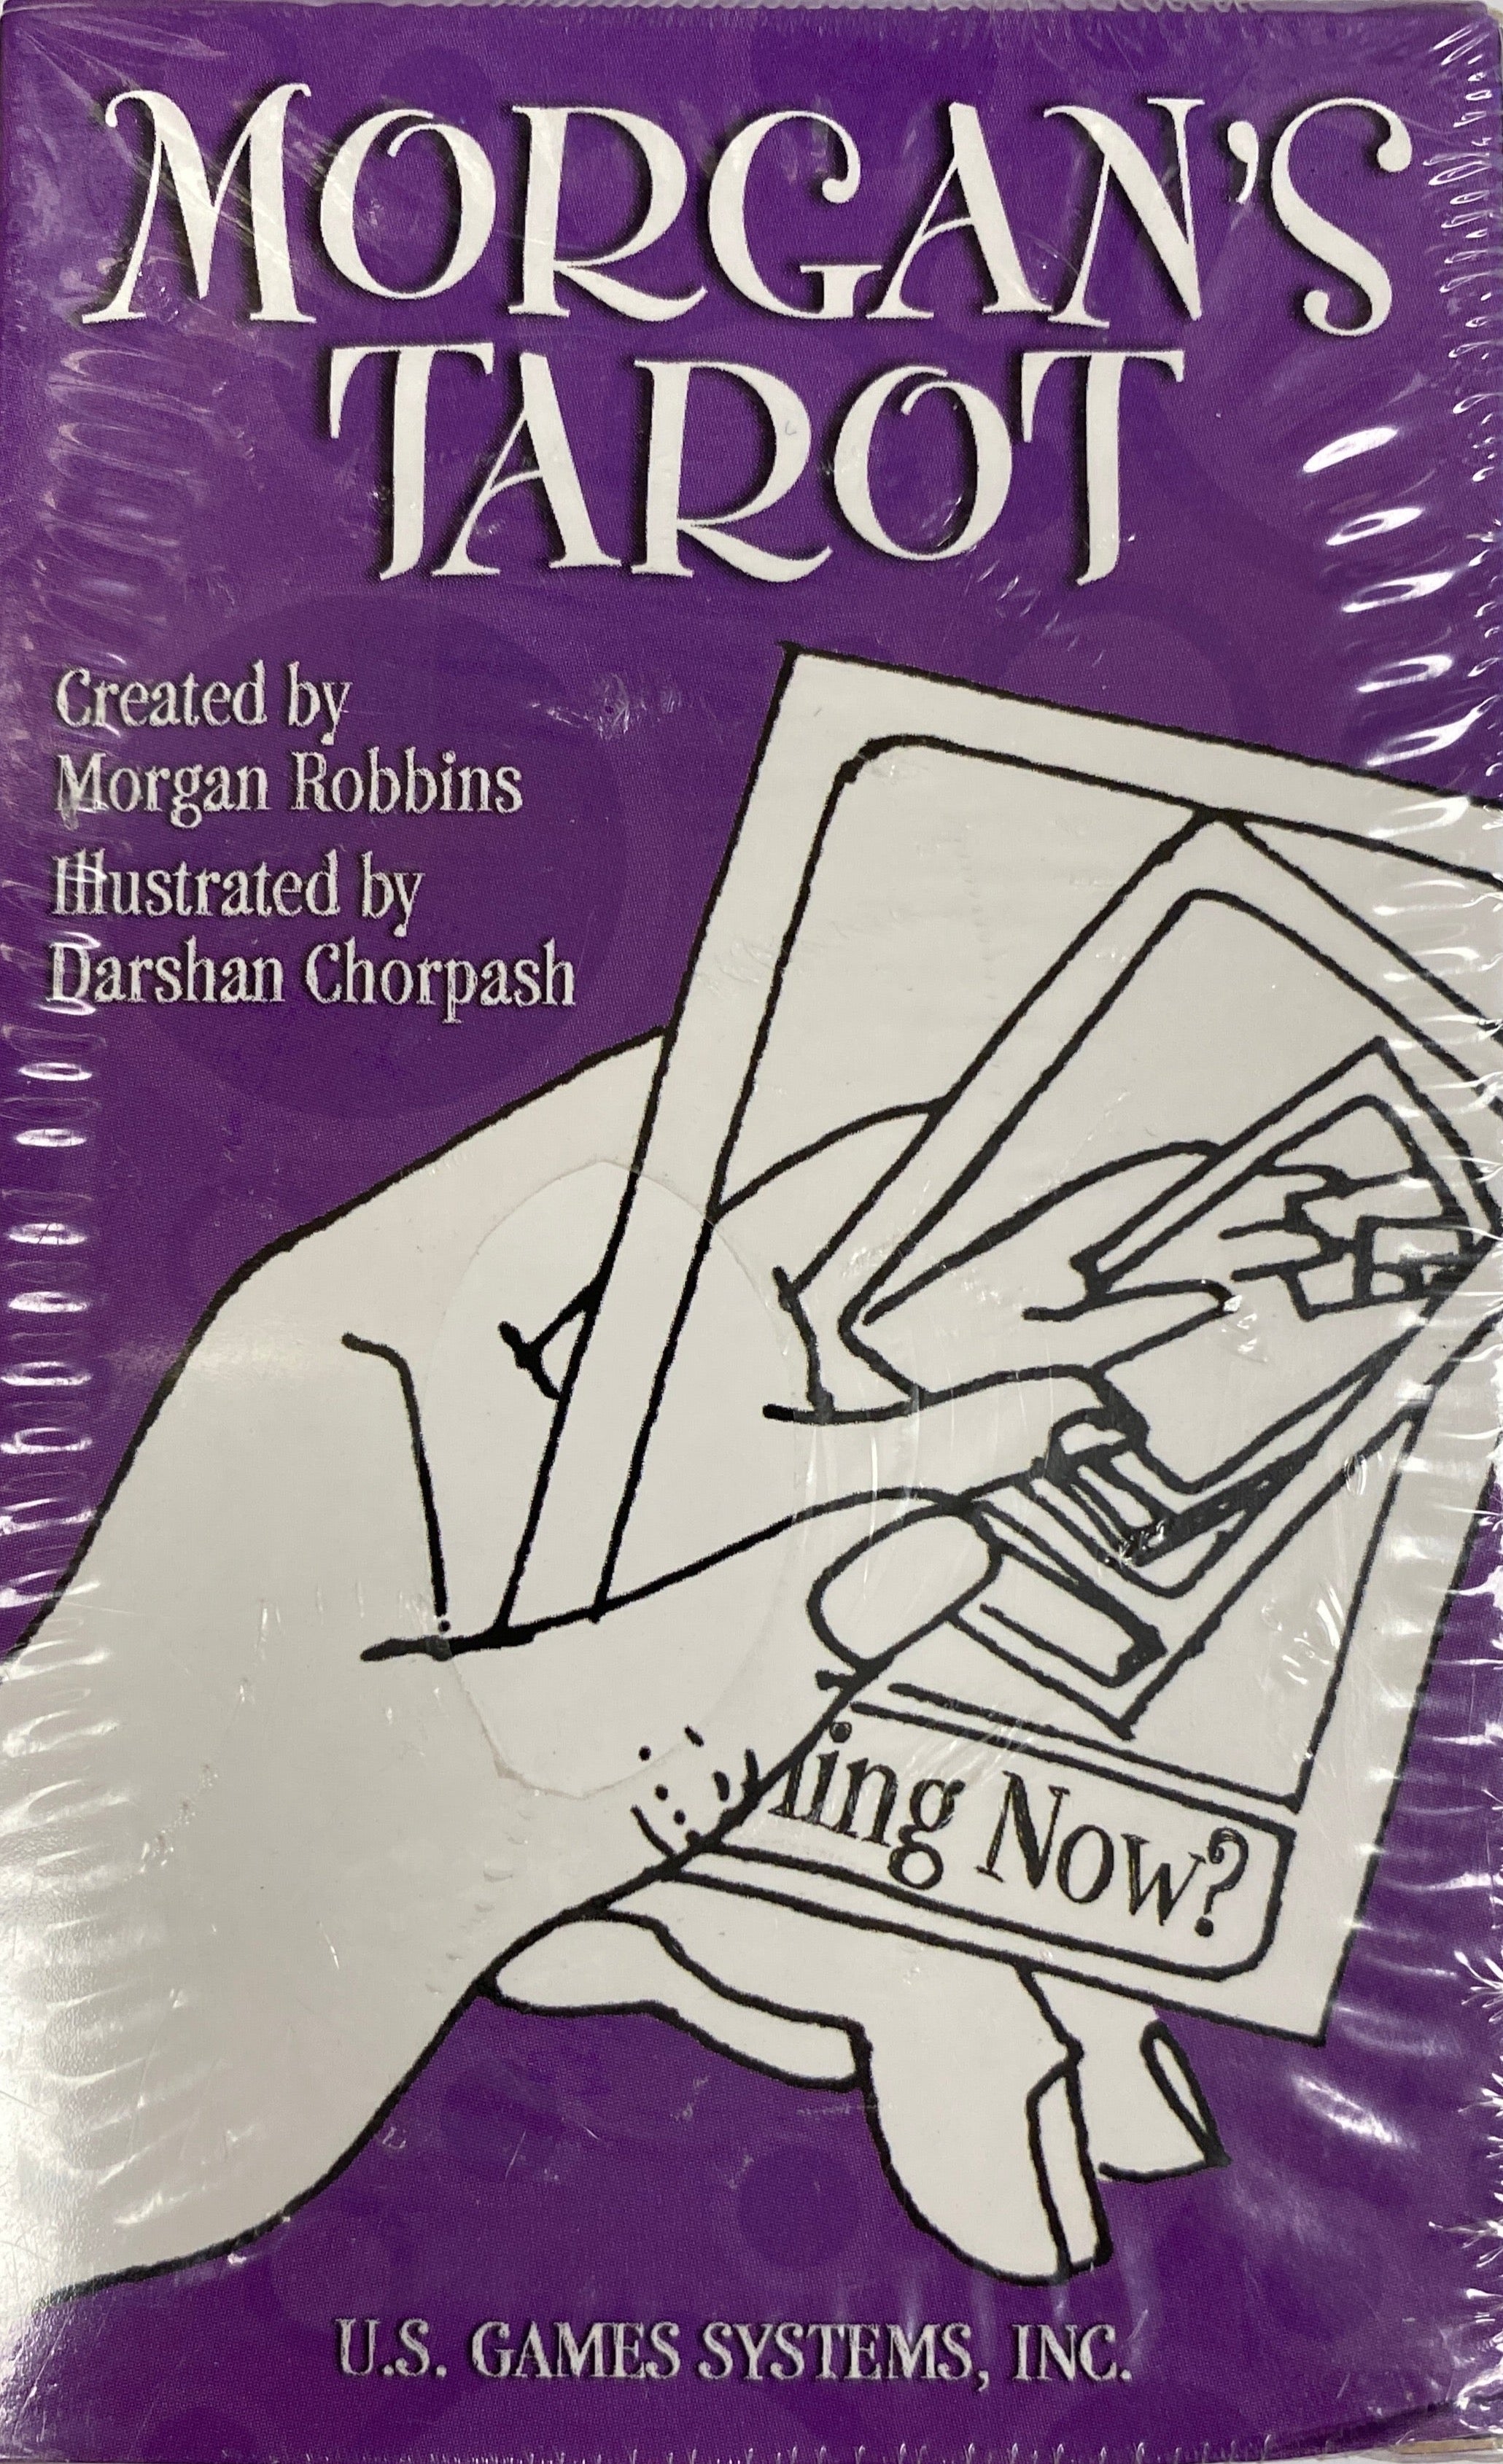 Morgan’s Tarot